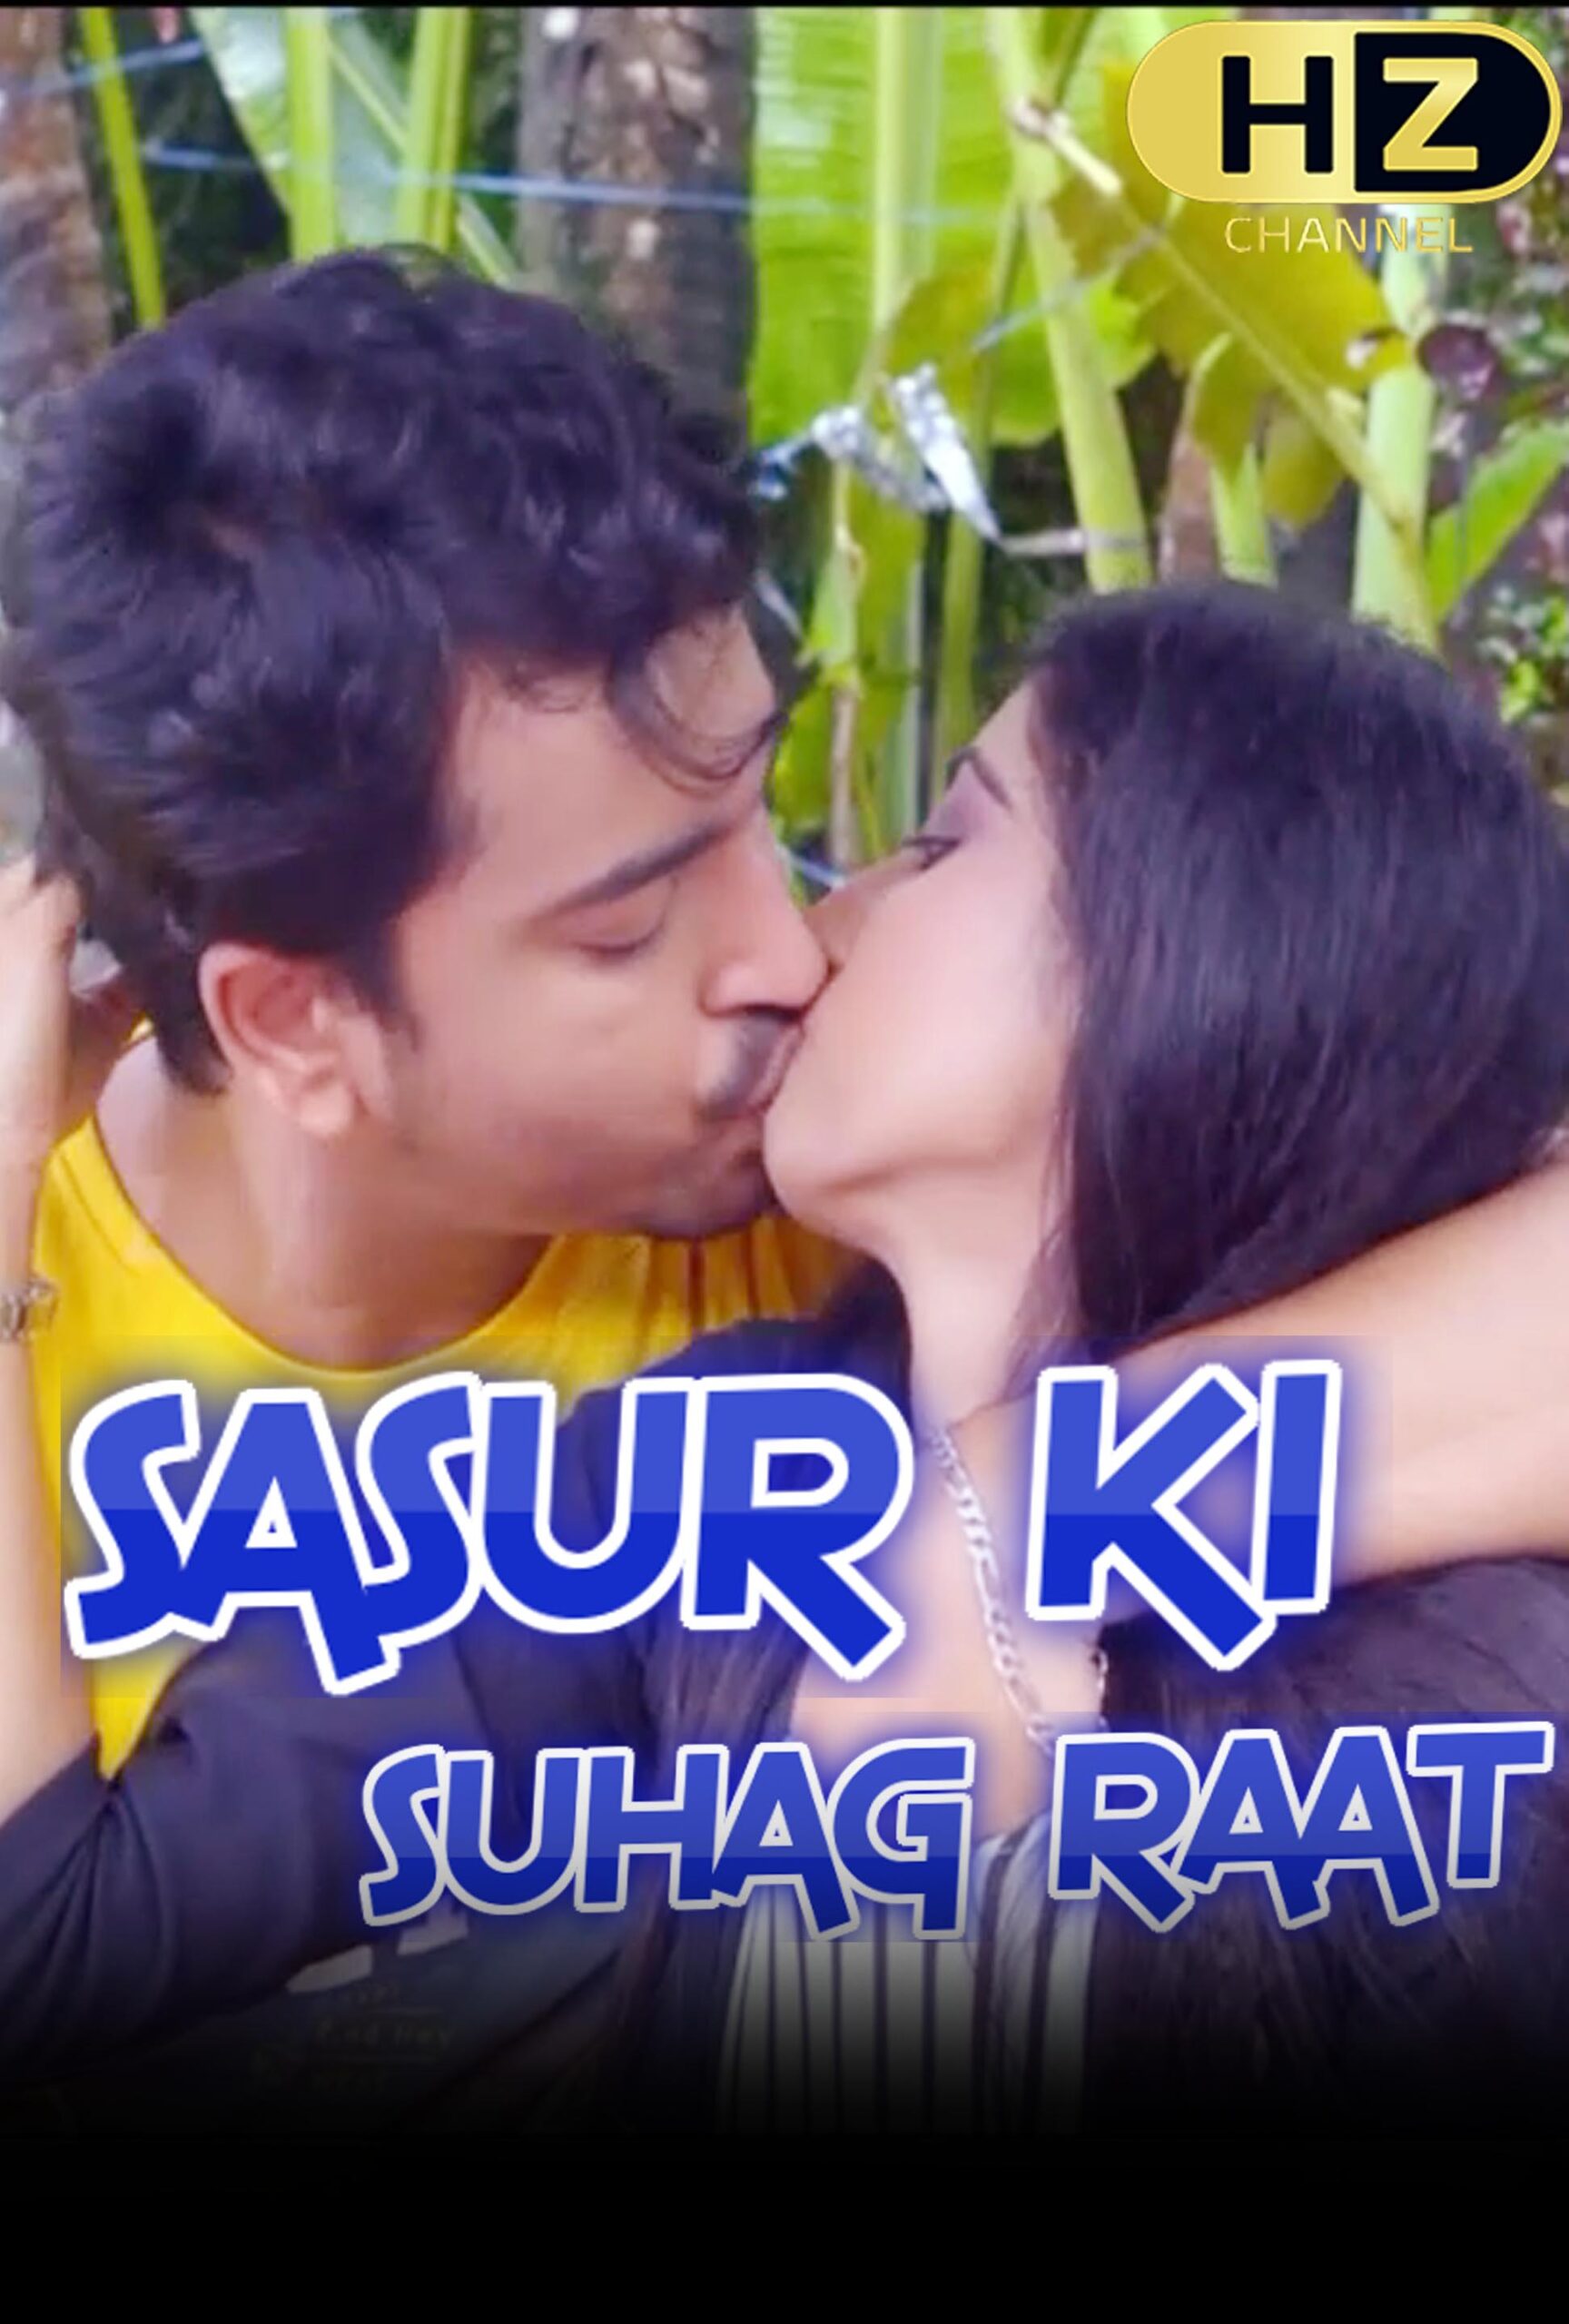 You are currently viewing Sasur Ki Suhagrat 2020 Hindi S01E01 Hot Web Series 720p HDRip 200MB Download & Watch Online